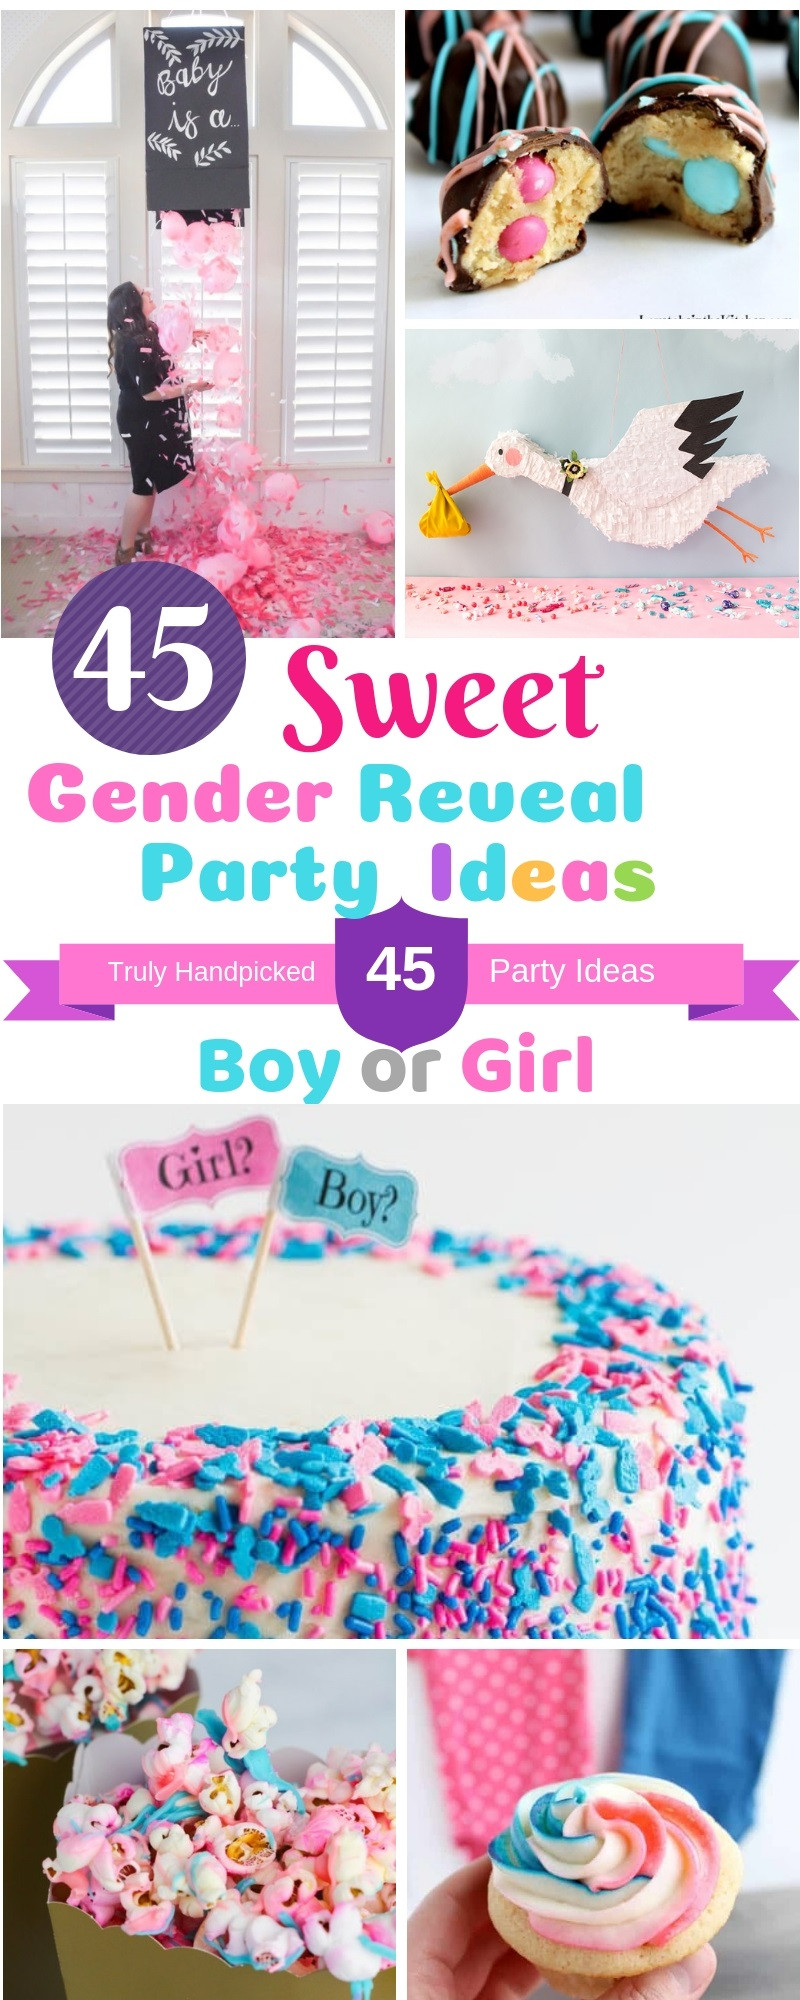 Unique Gender Reveal Party Ideas
 45 DIY Gender Reveal Party Ideas Creative and Sweet Ideas